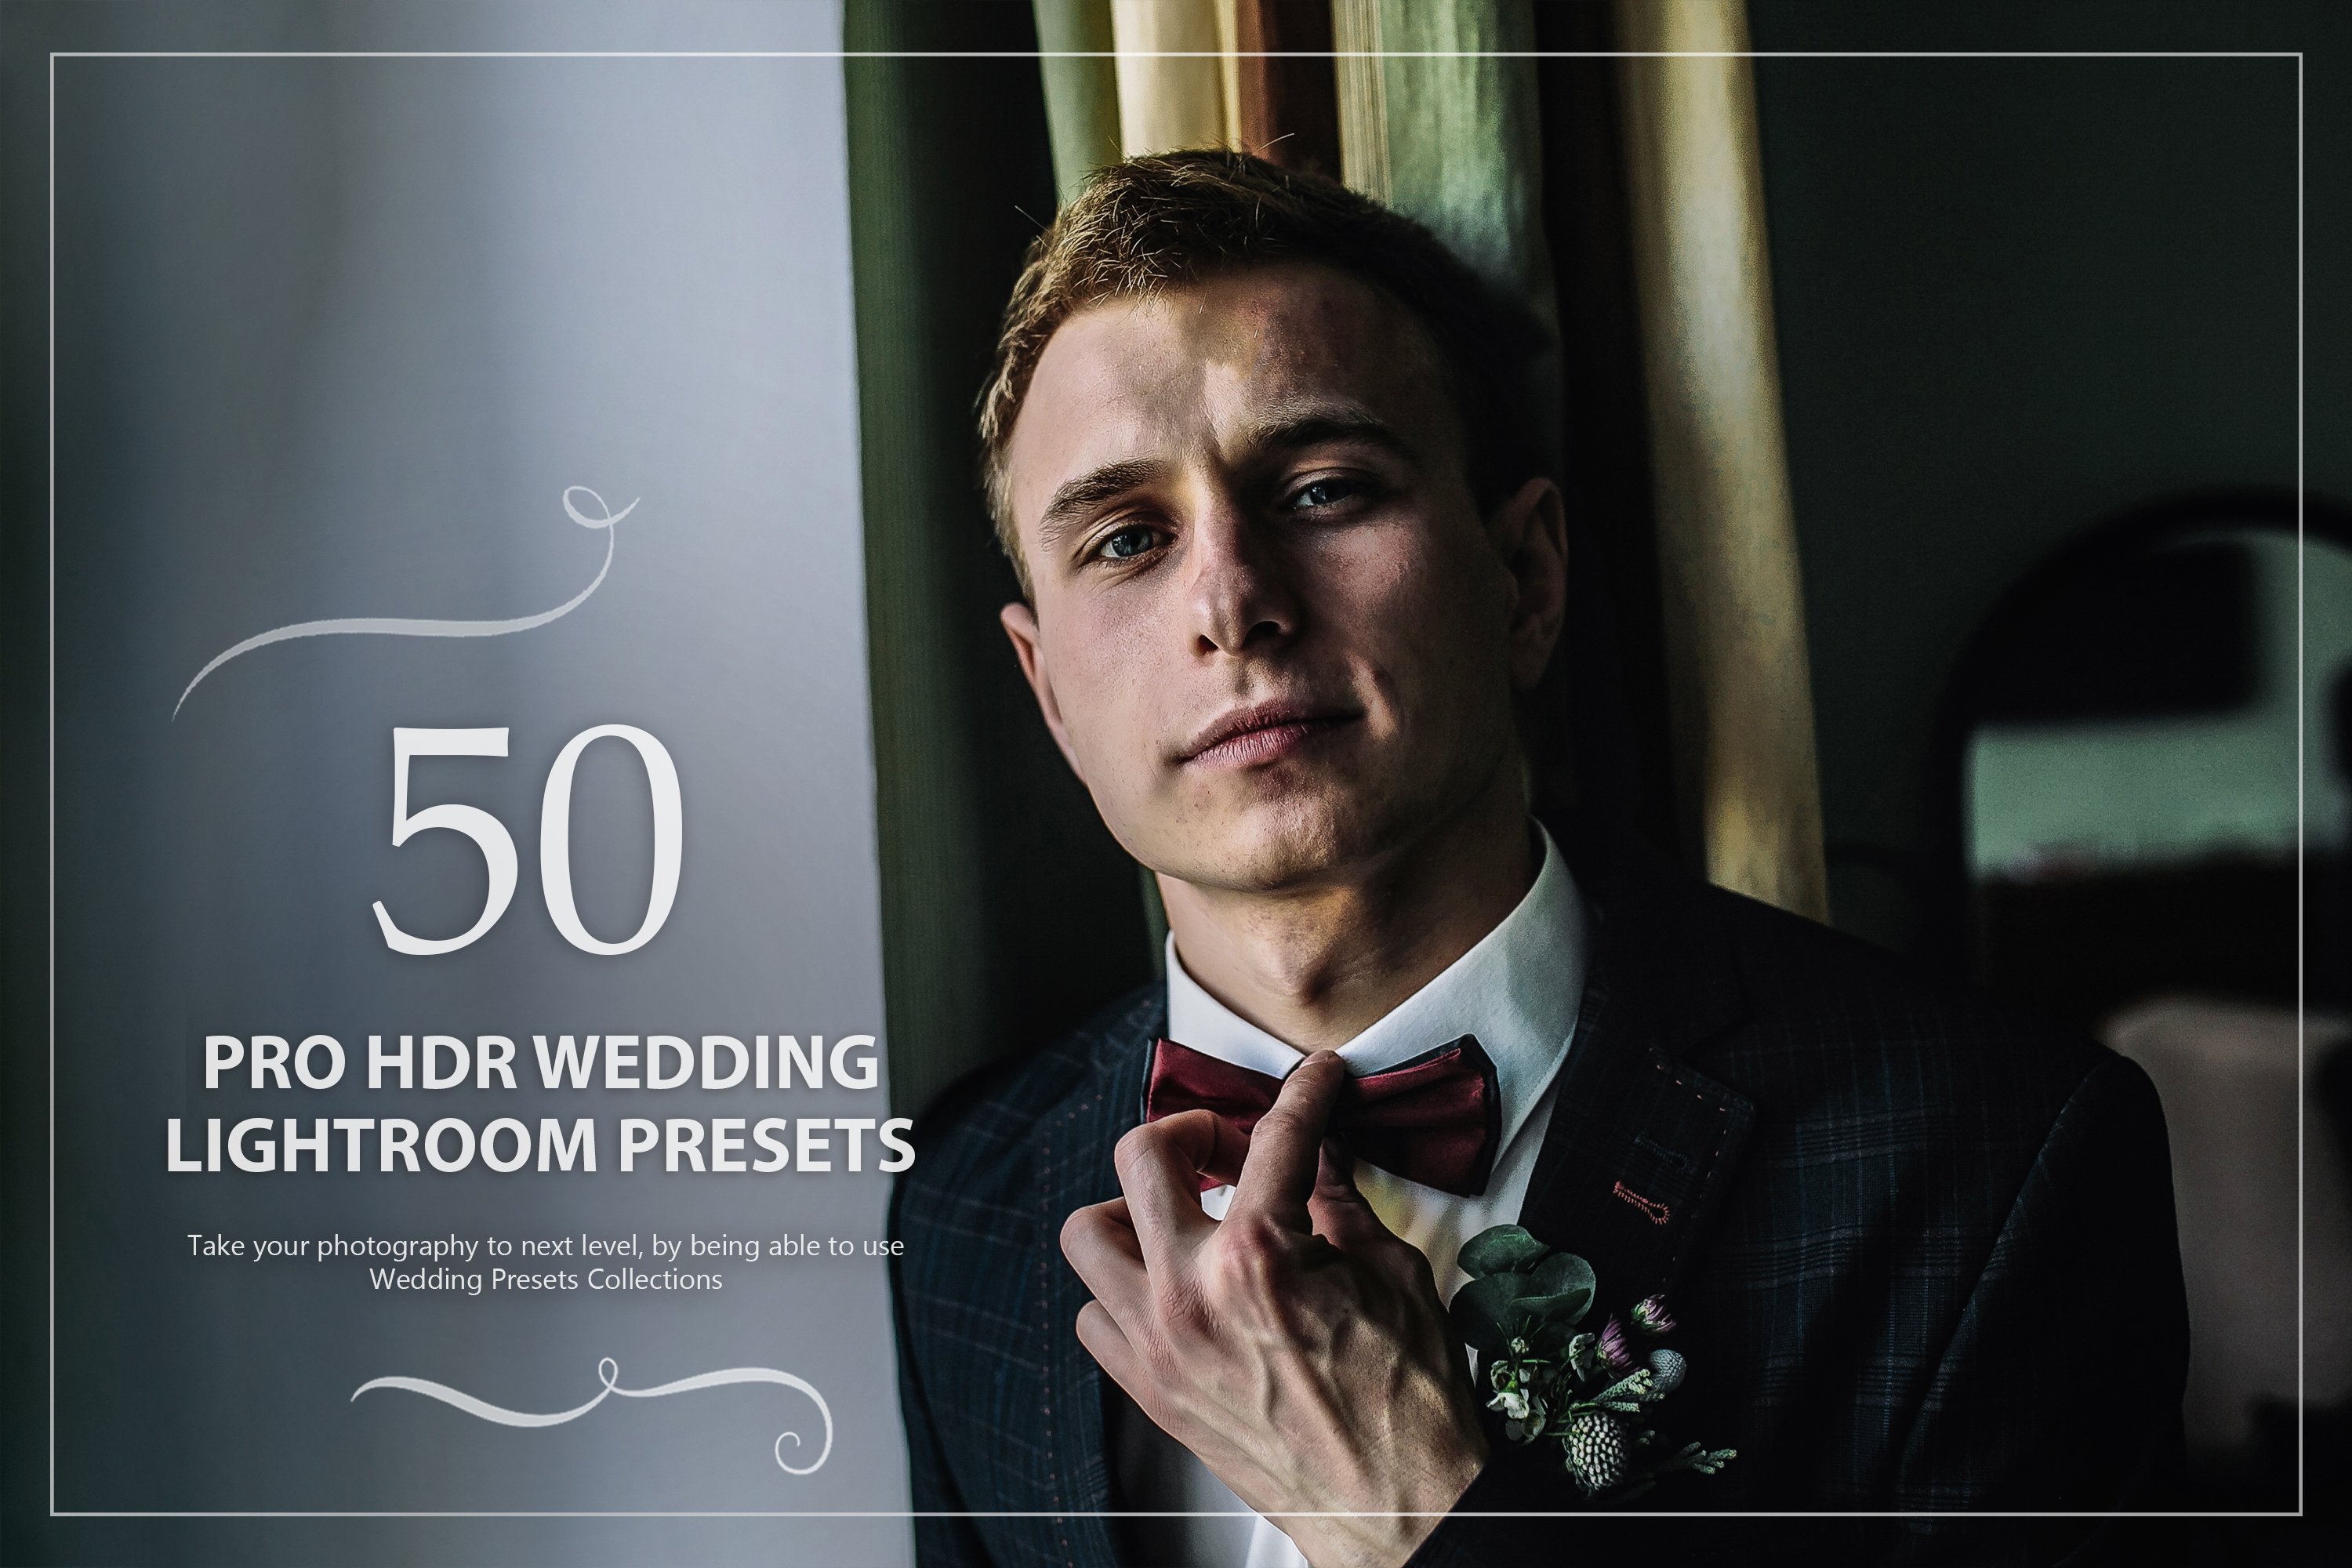 50 Pro HDR Wedding Lightroom Presetscover image.